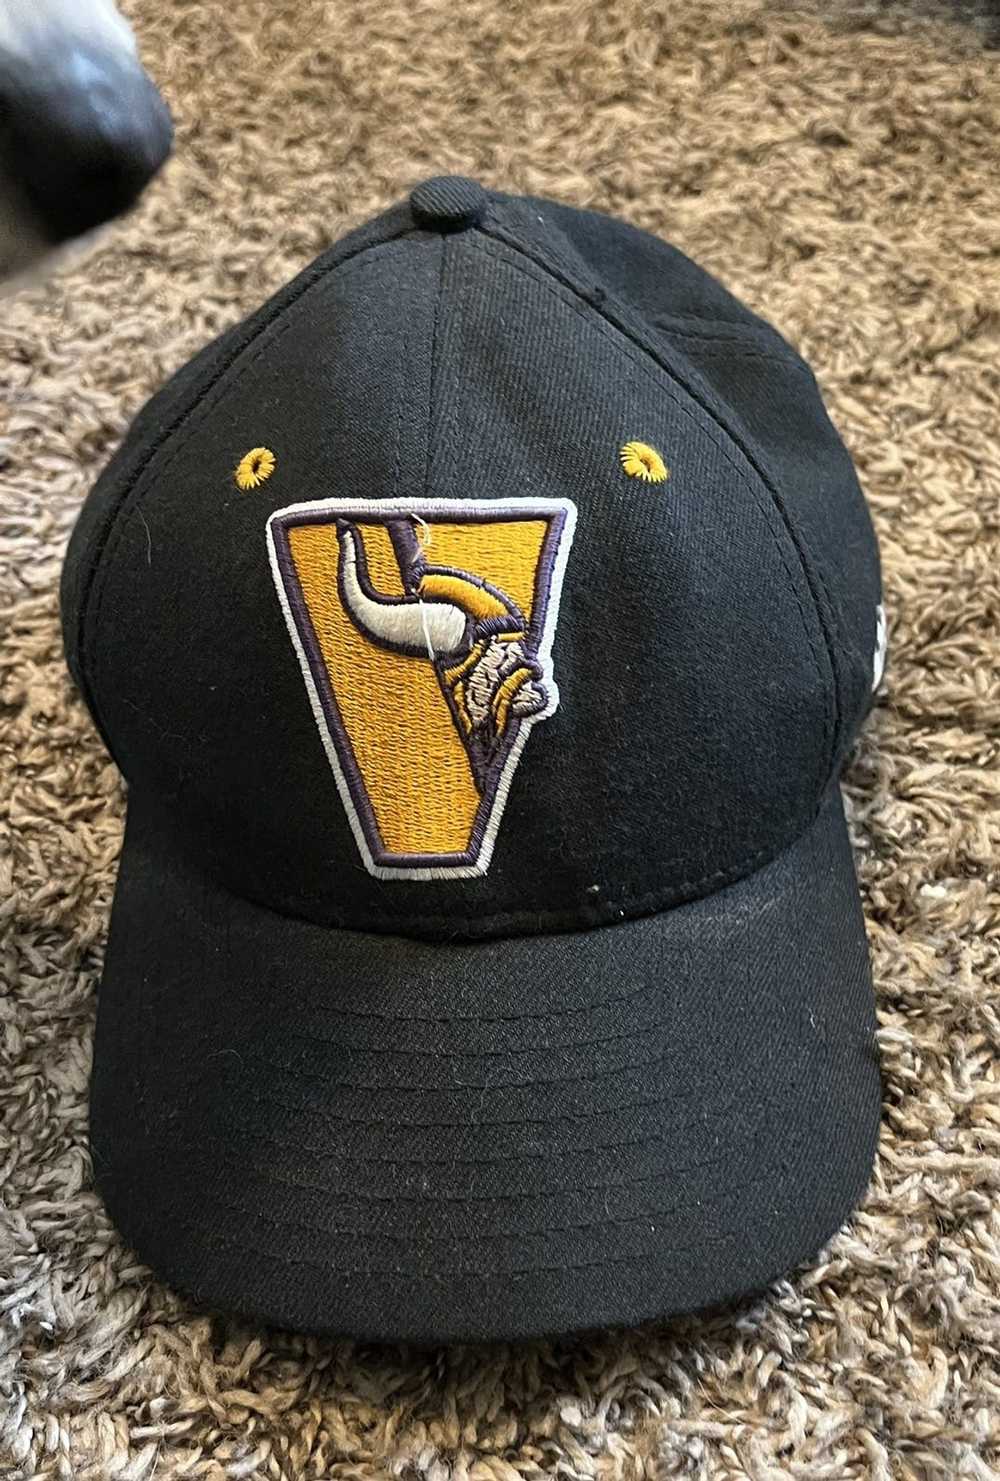 New Era Vikings new era hat - image 2